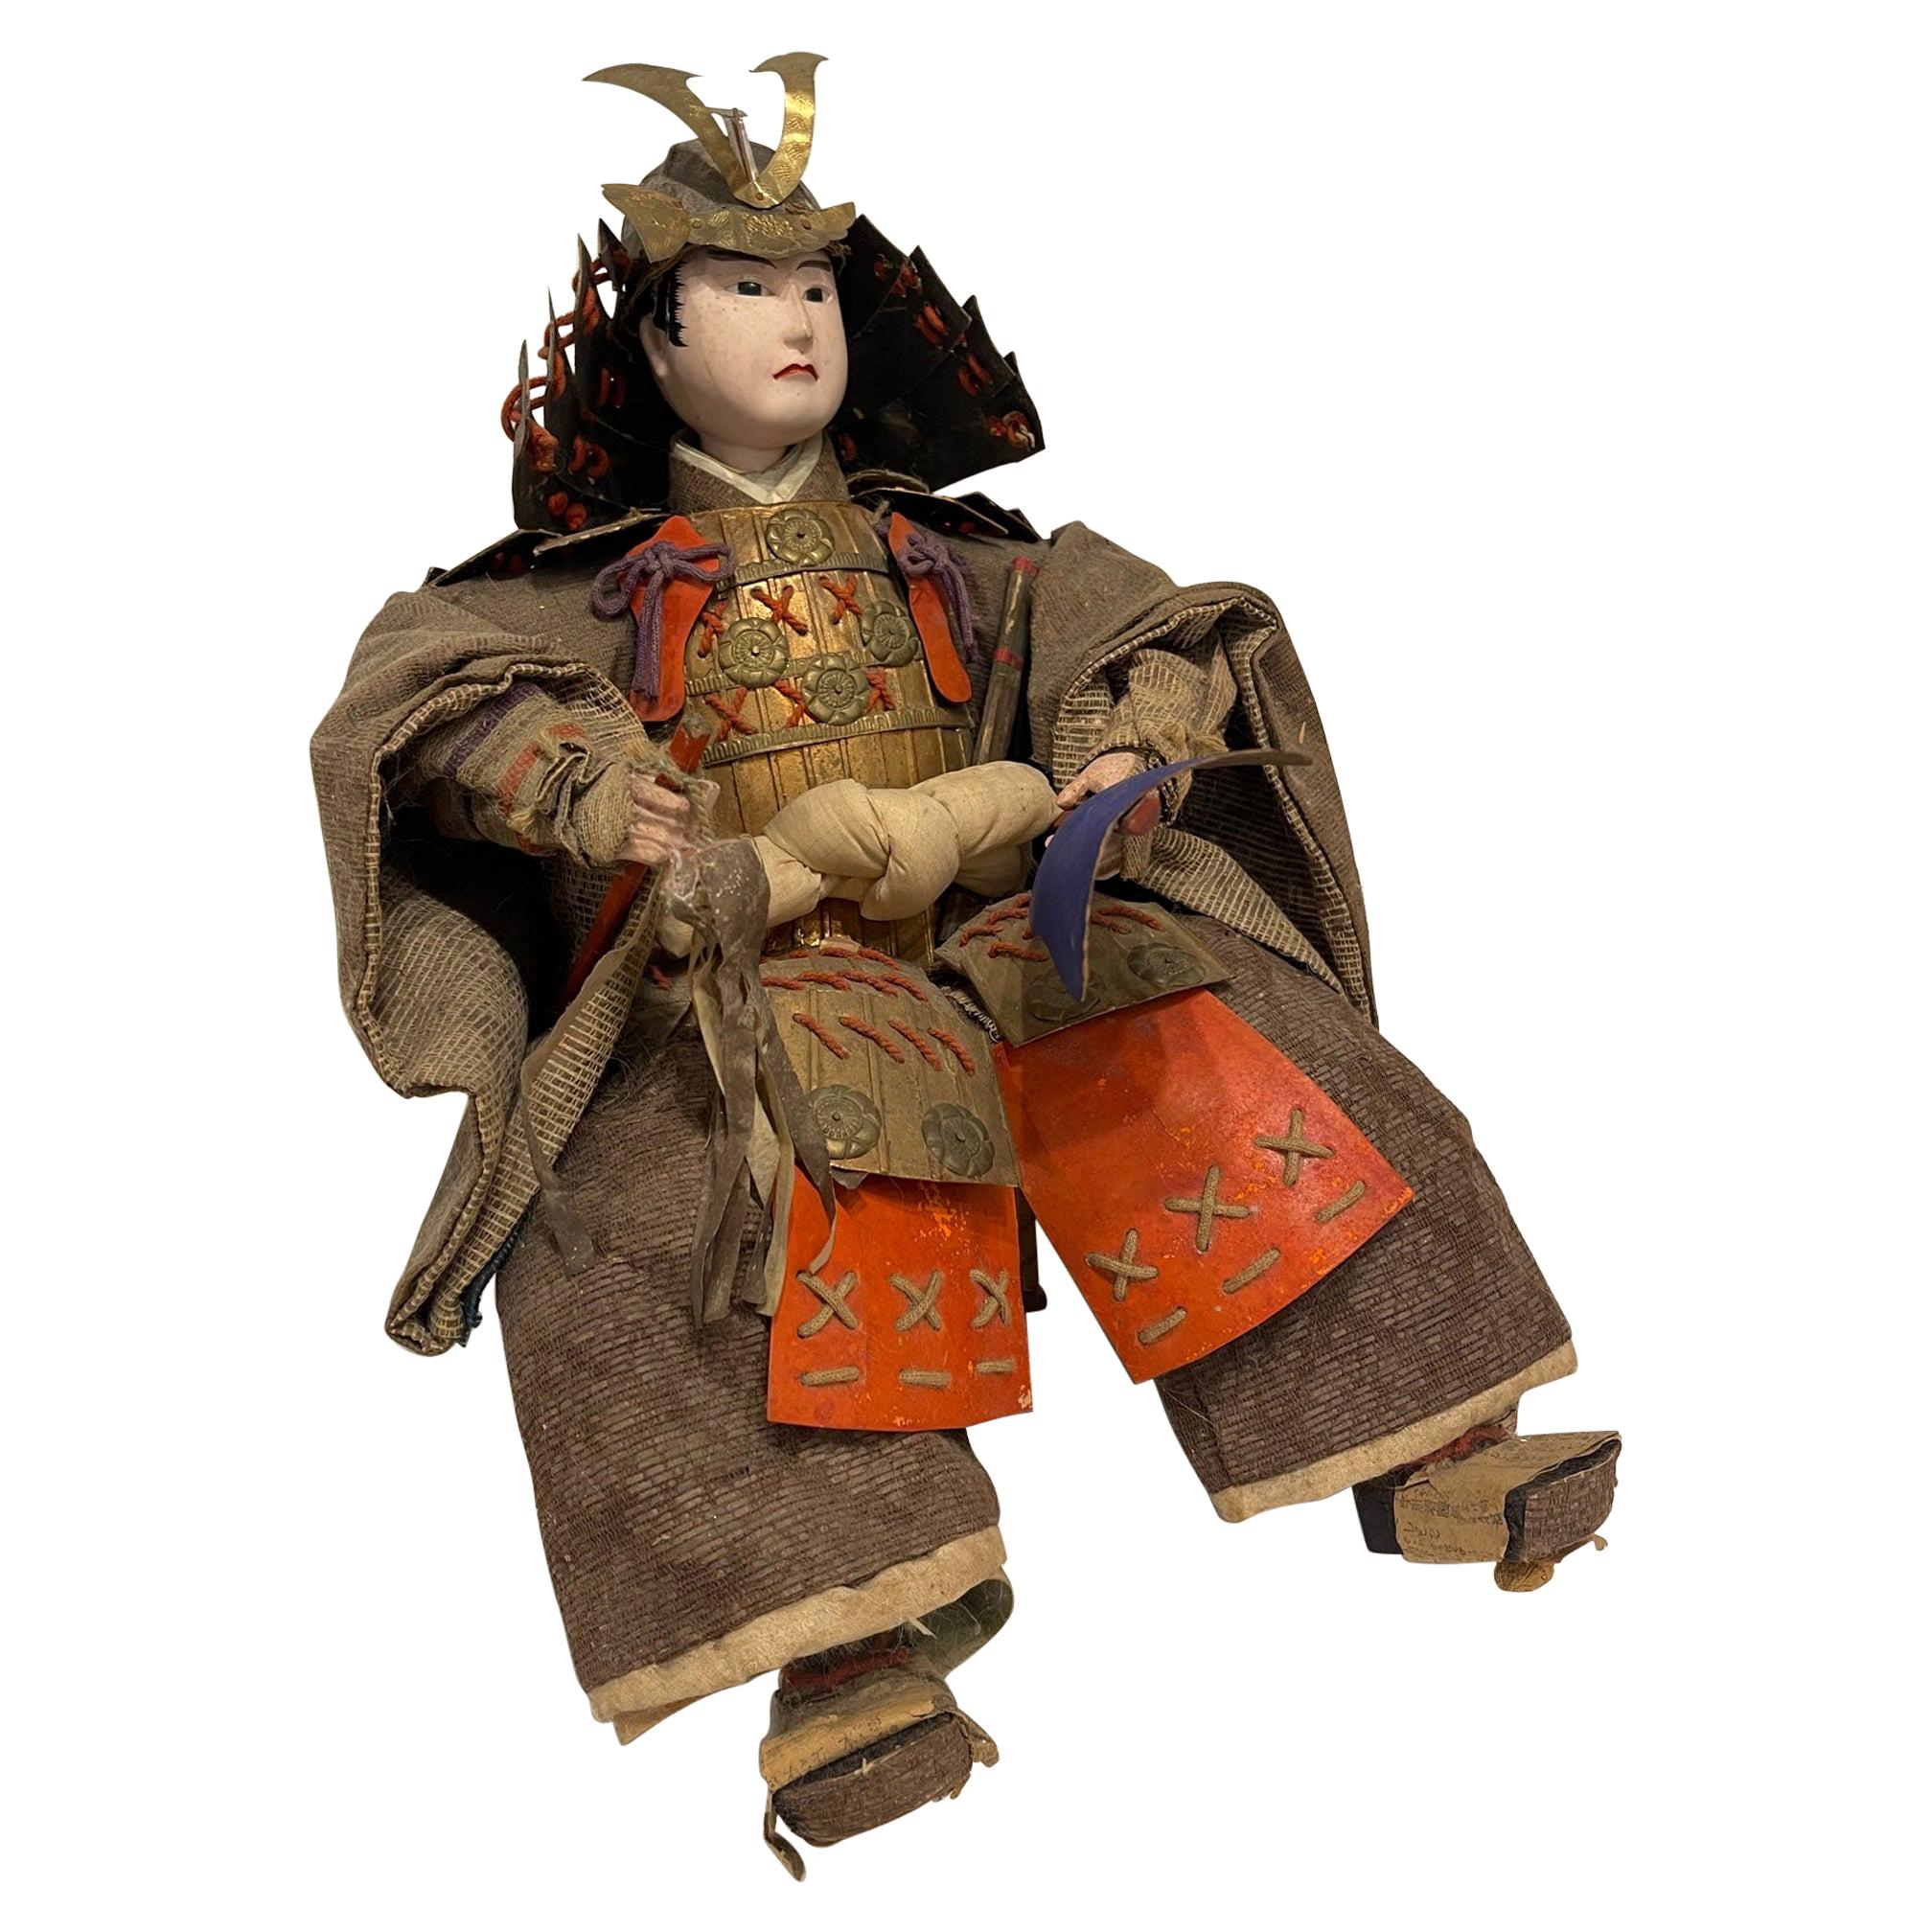 Japanese Samurai Doll or Figure, Meiji Period, circa 1870s